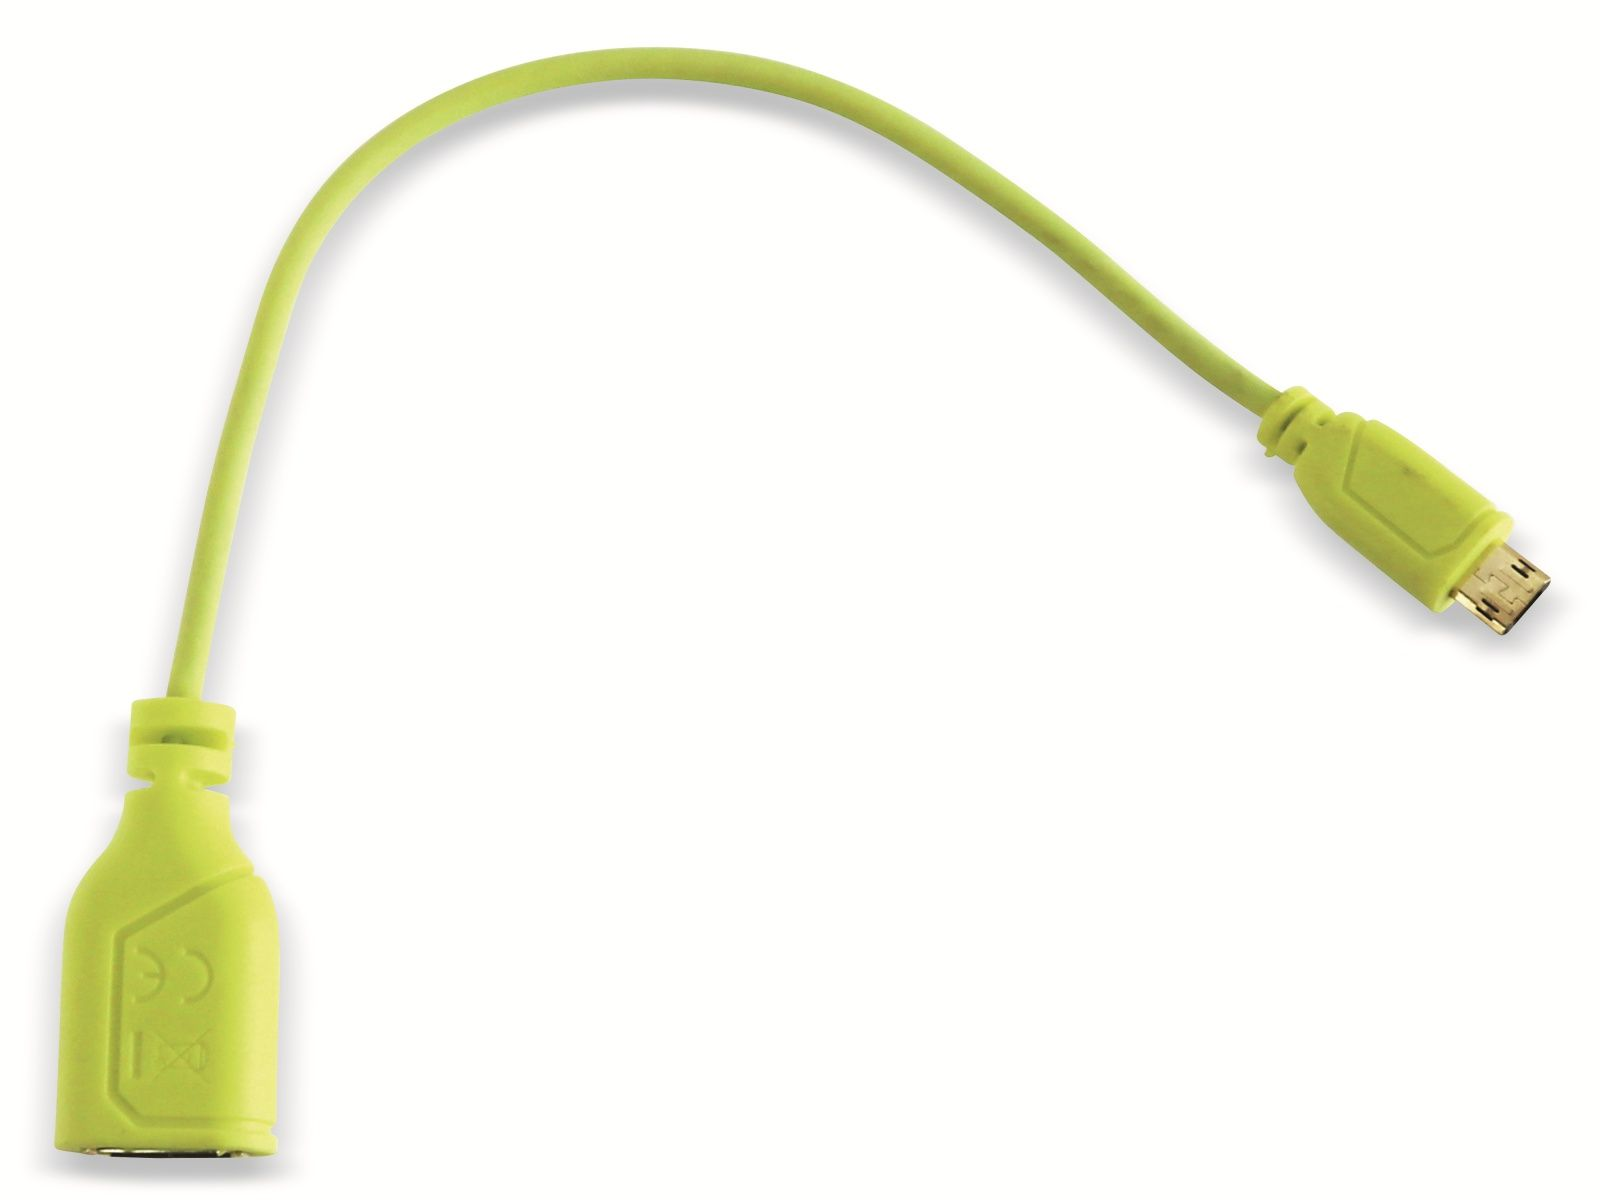 Kabel m, Adapter, 135706, Flexi-Slim, grün, 0,15 0,15 Micro-USB HAMA OTG m